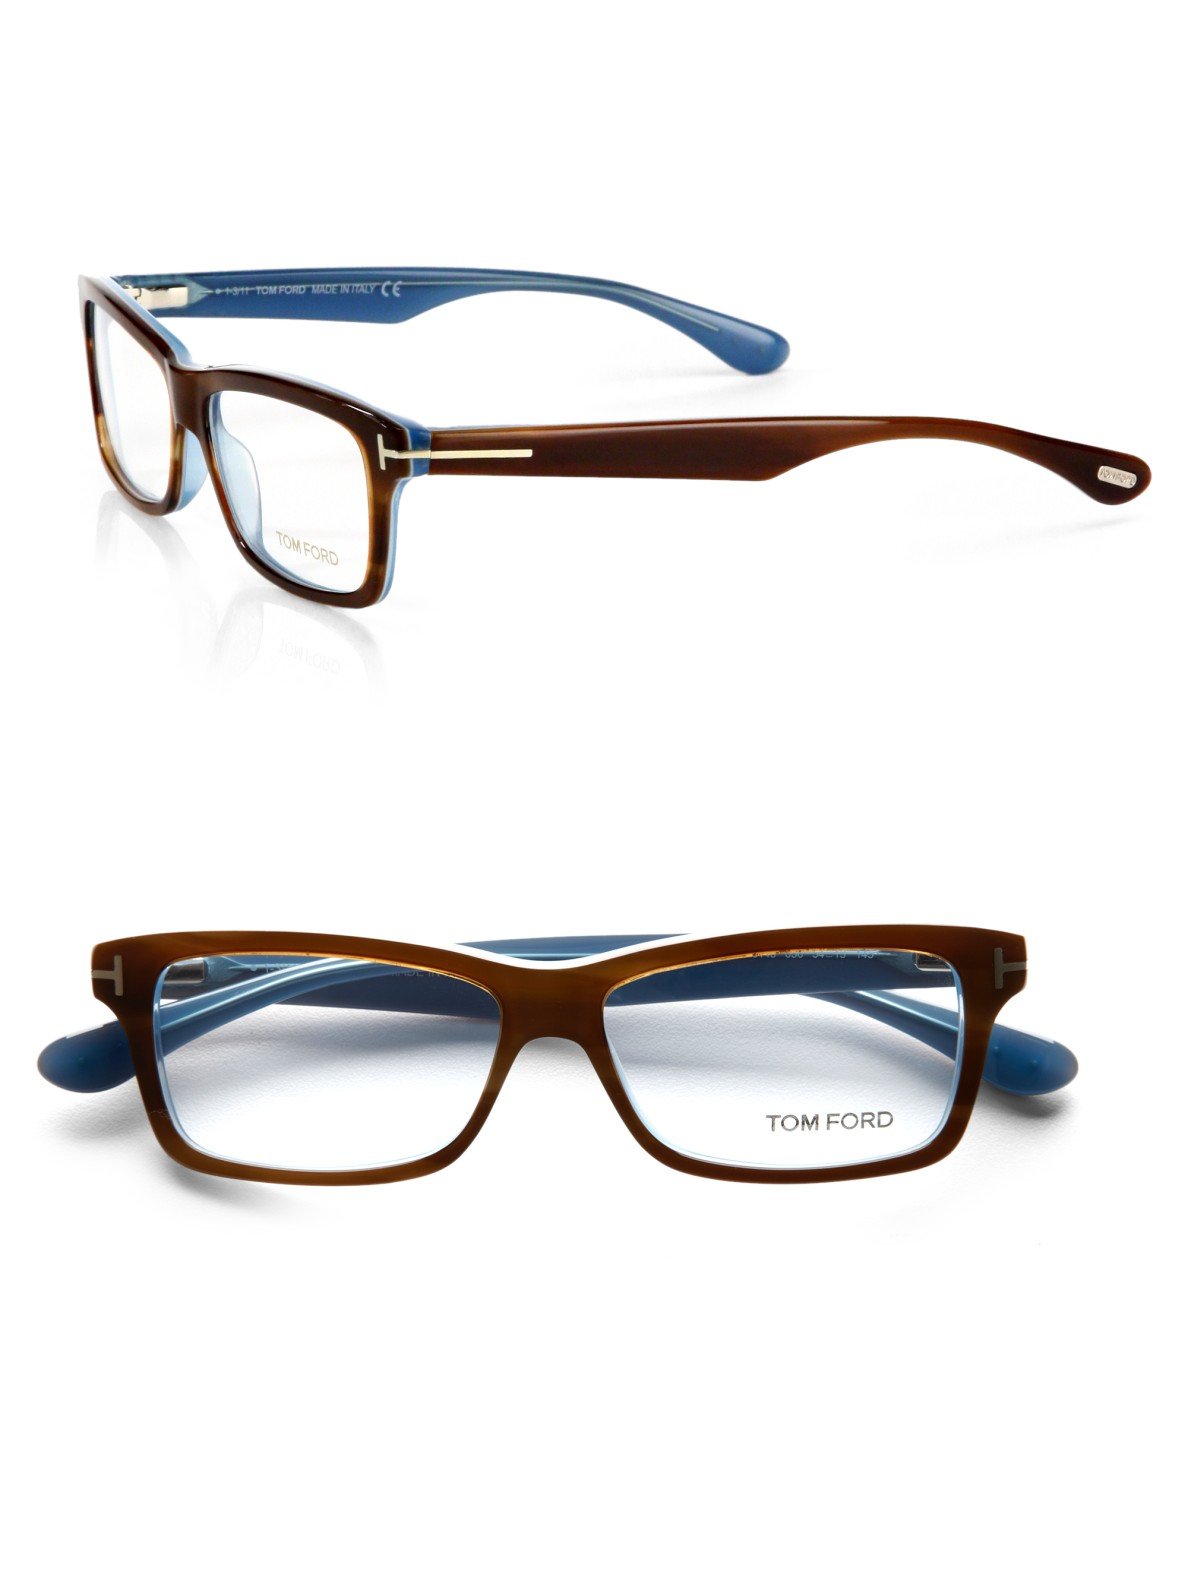 Lyst - Tom Ford Plastic Optical Frames in Brown for Men